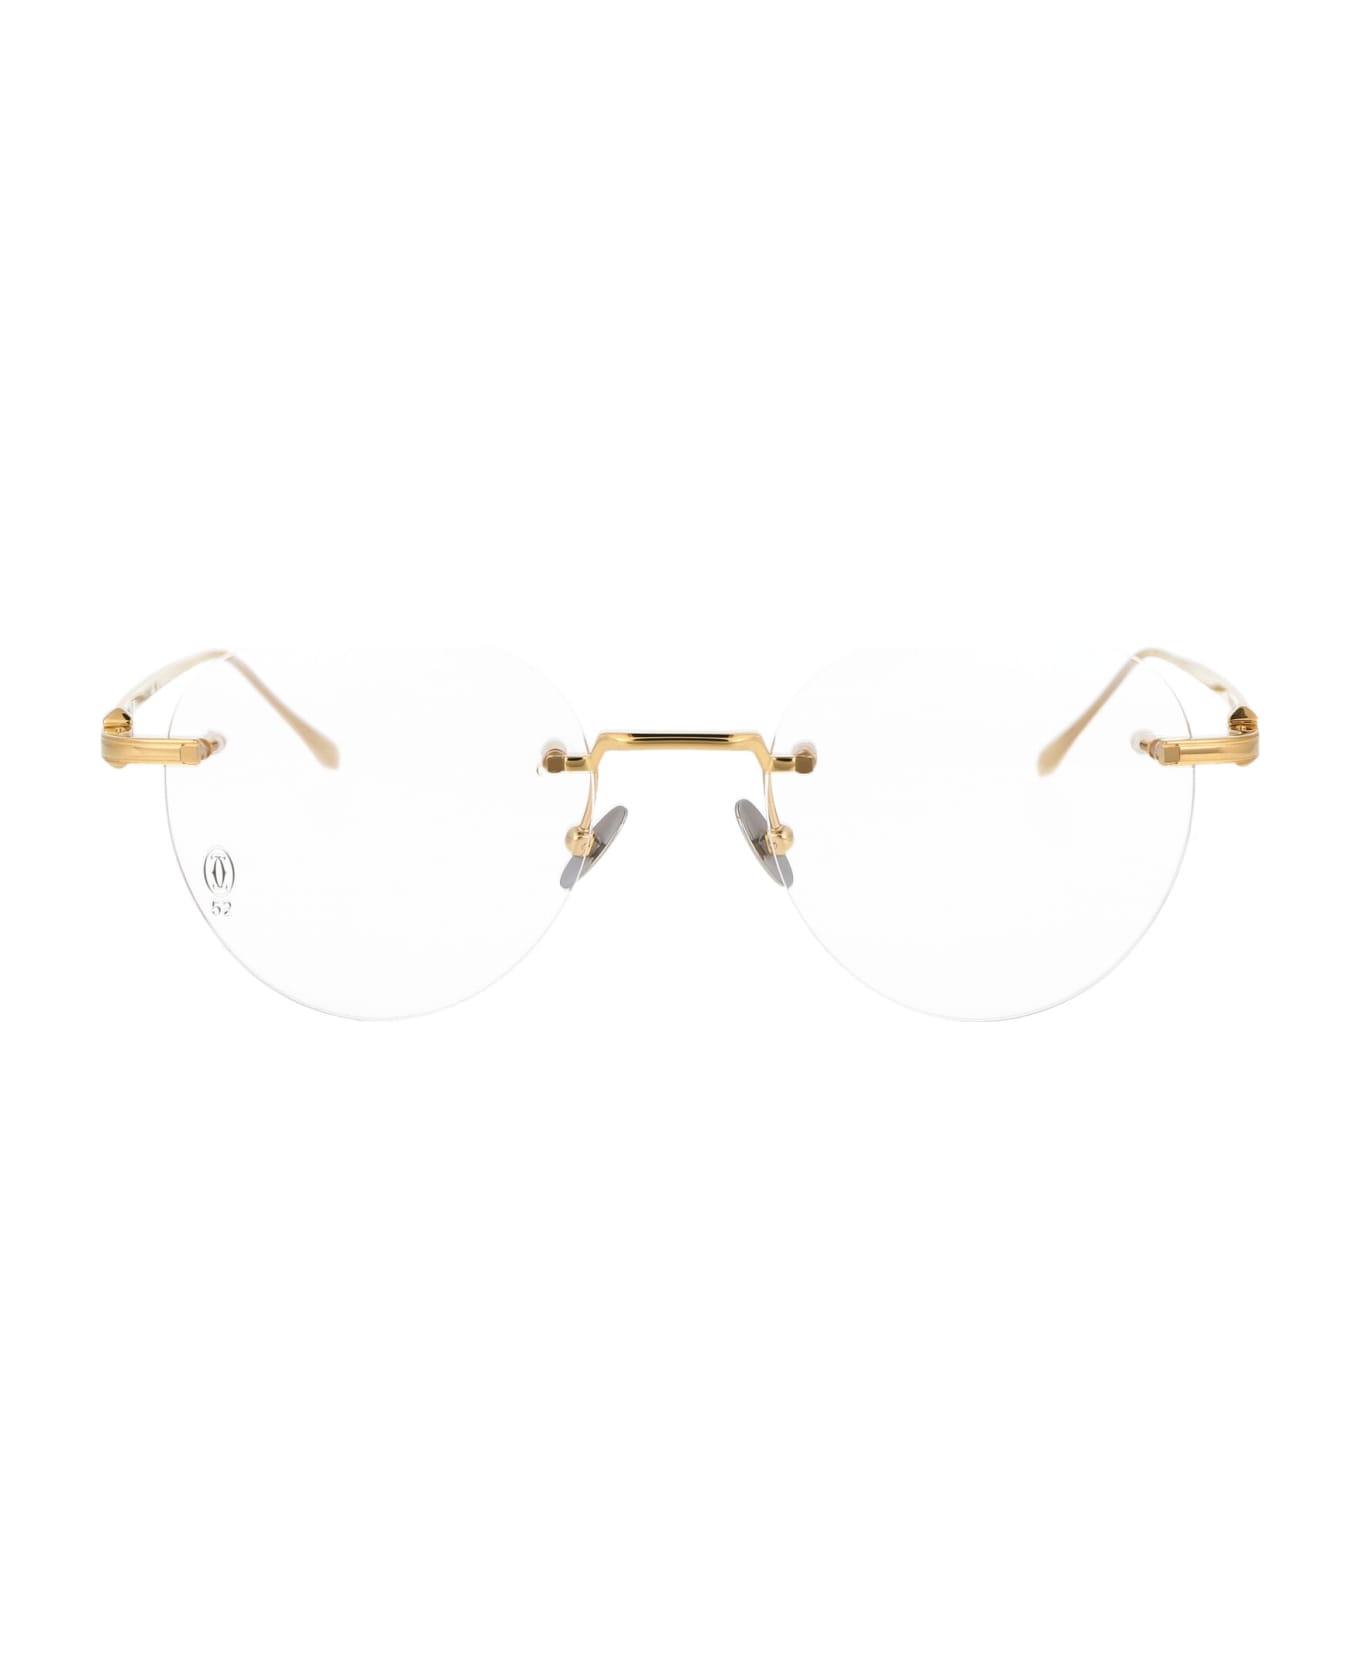 Cartier Eyewear Ct0342o Glasses - 002 GOLD GOLD TRANSPARENT